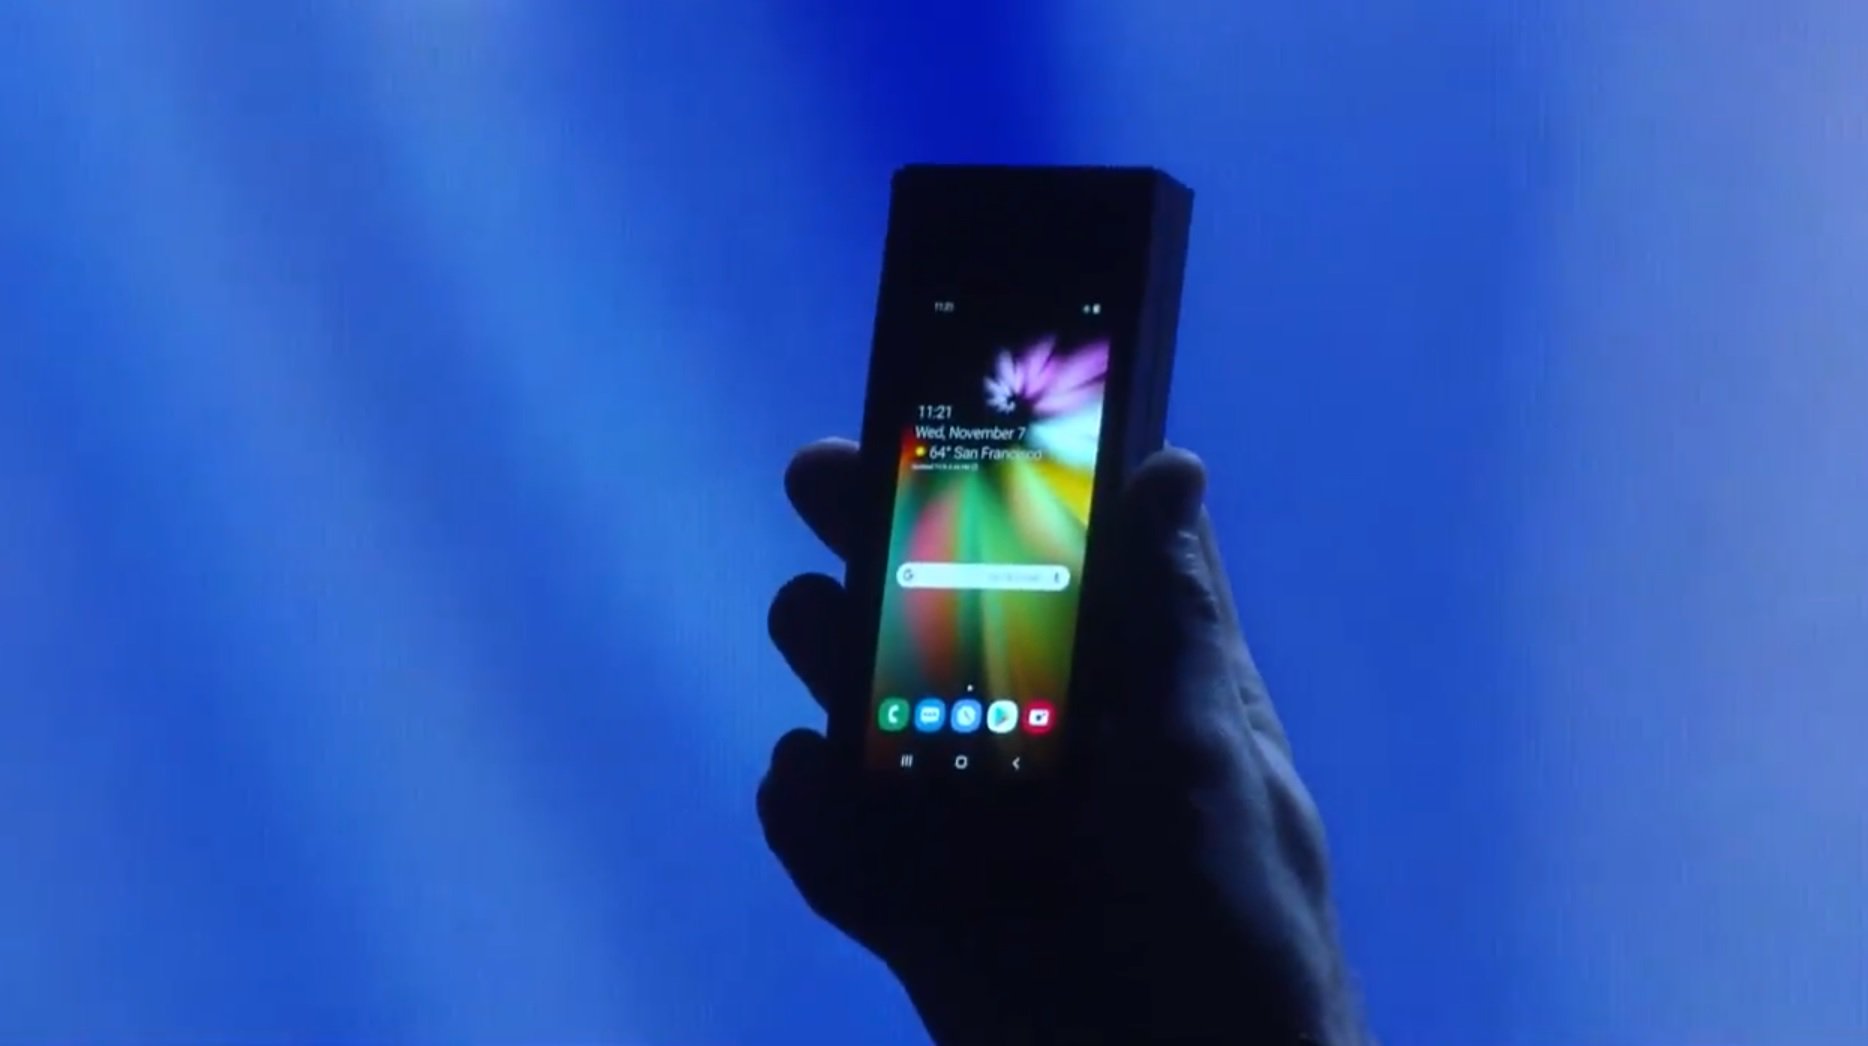 Samsung showed a foldable smartphone